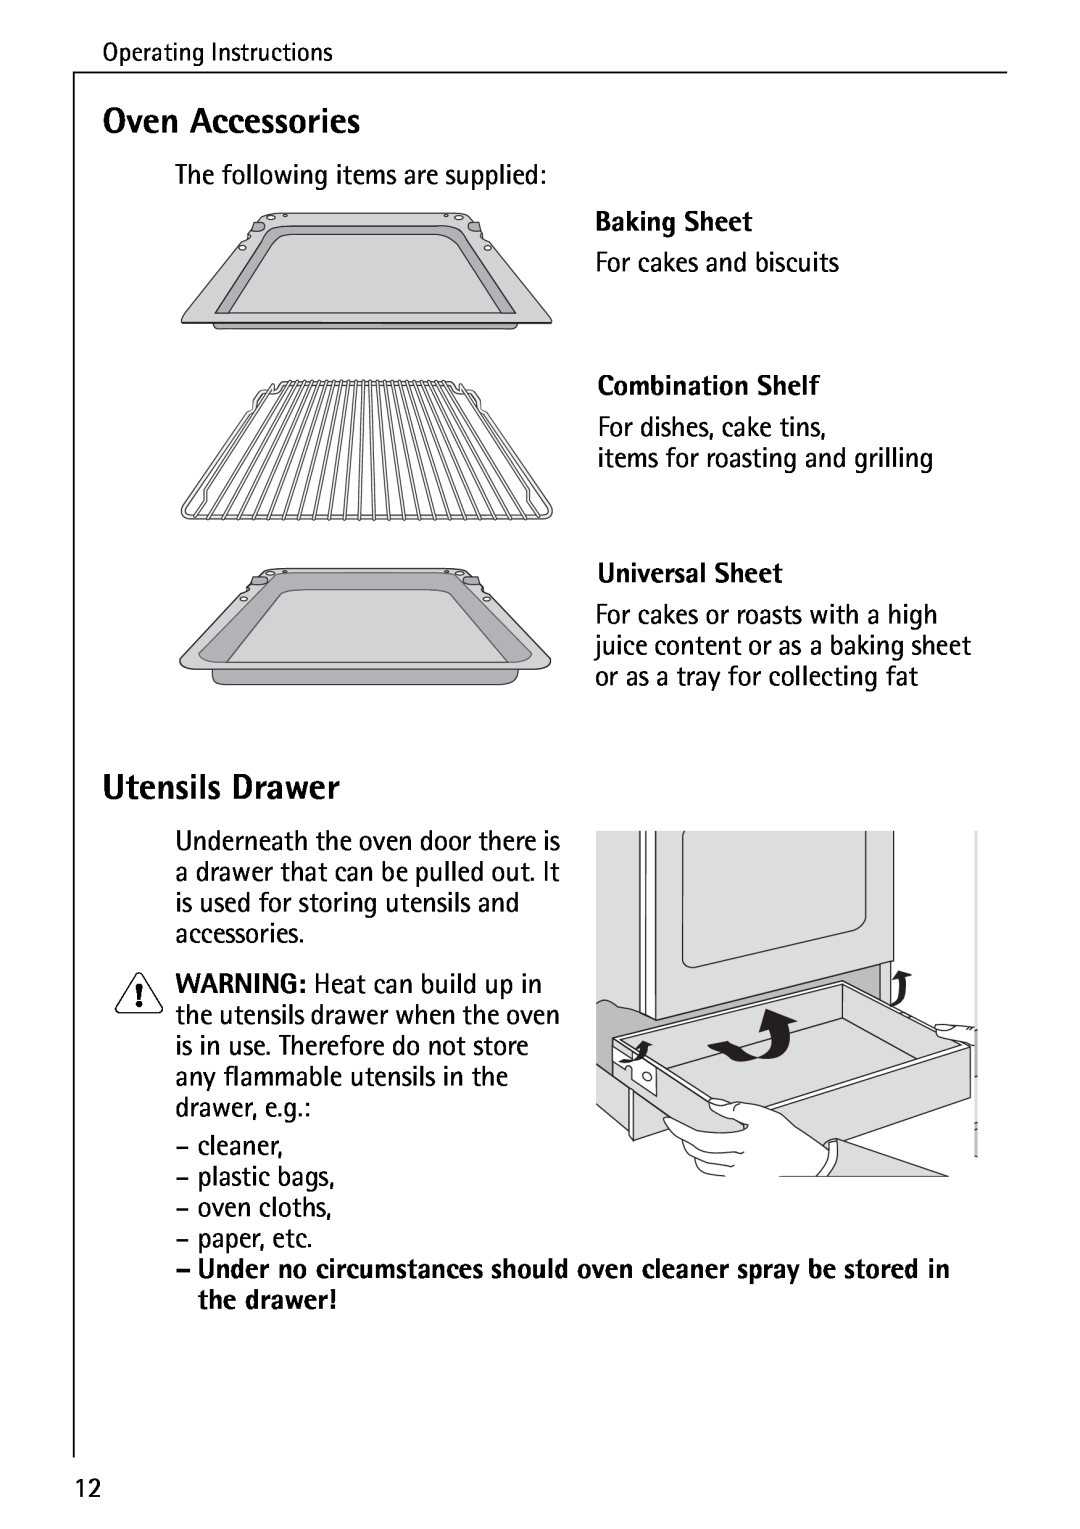 AEG 5033 V operating instructions Oven Accessories, Utensils Drawer, Baking Sheet, Combination Shelf, Universal Sheet 